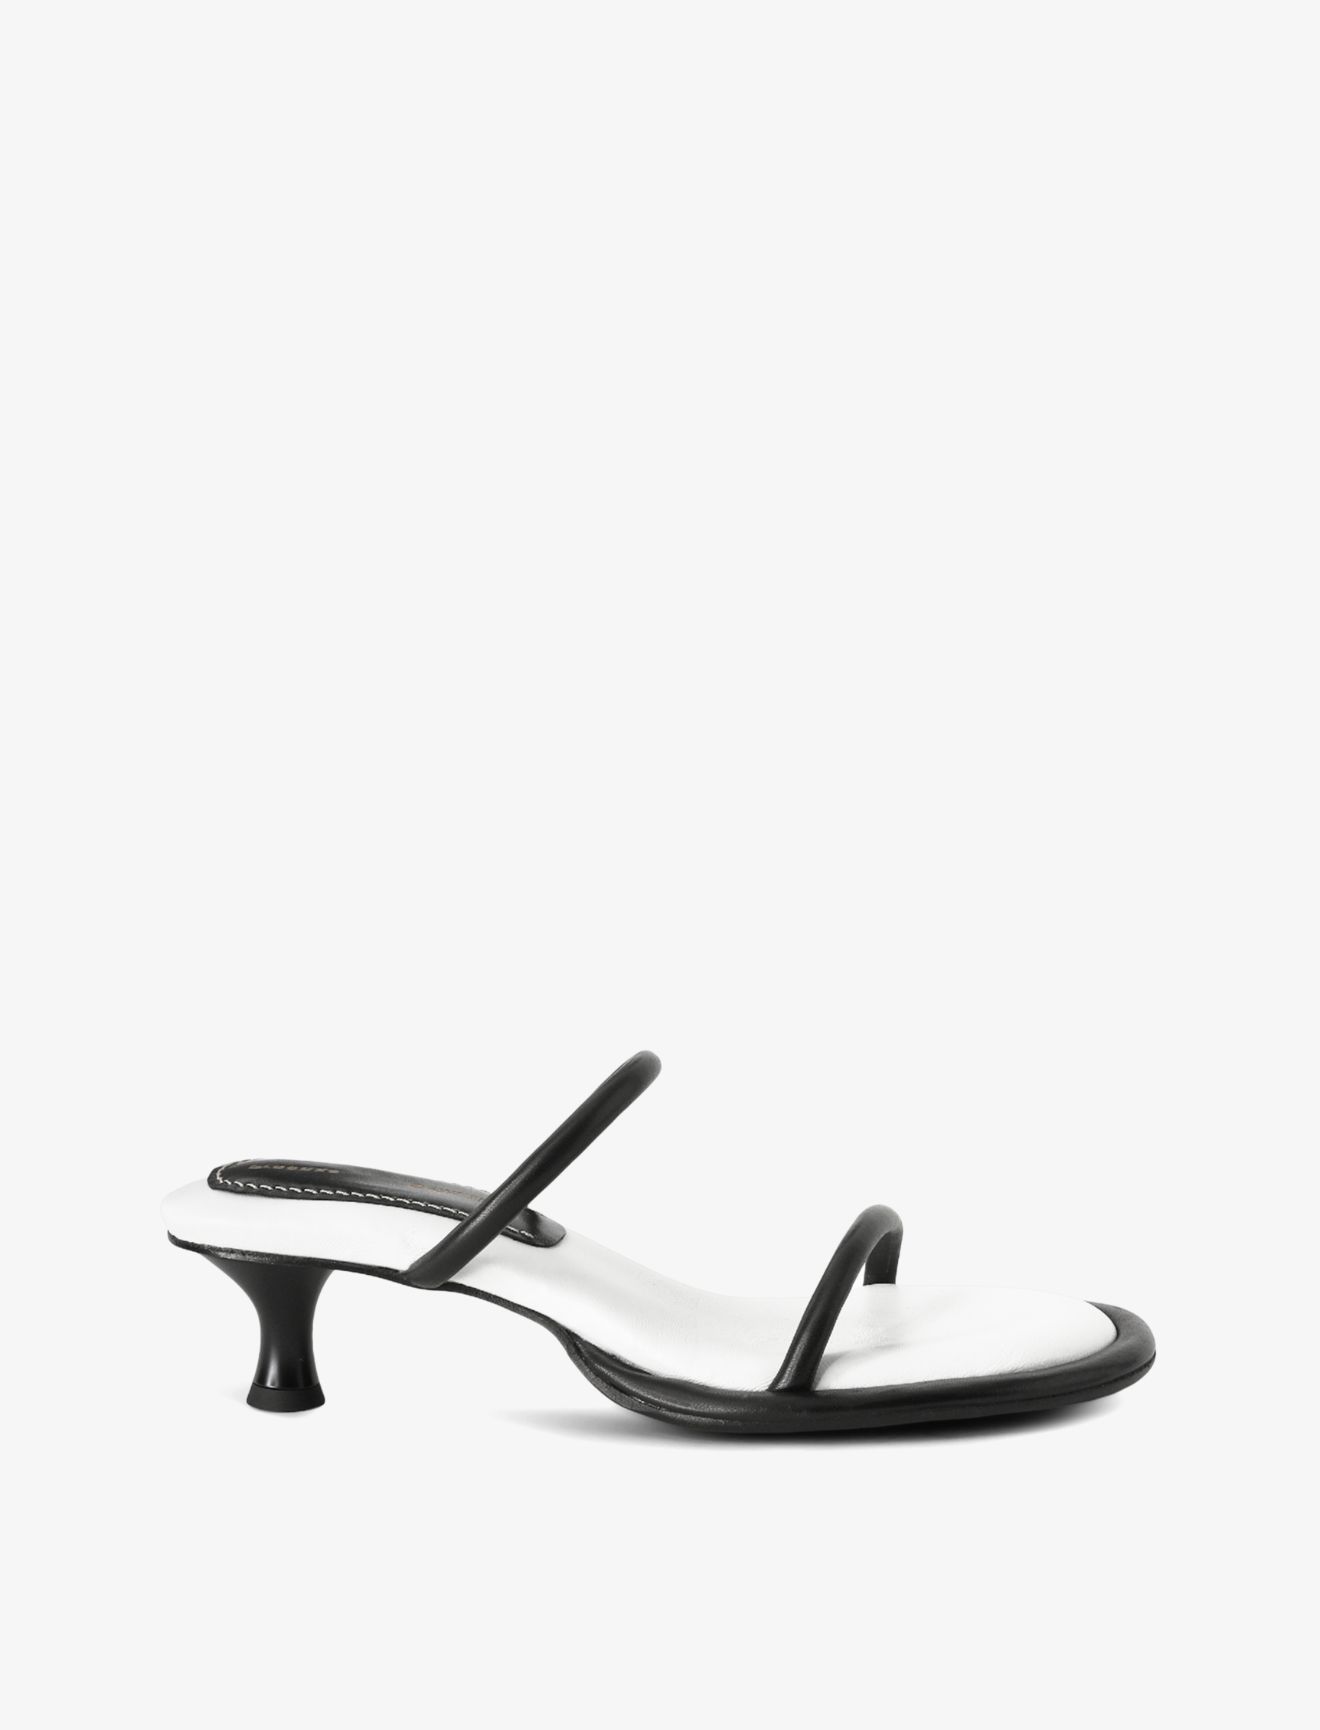 Pipe Strappy Sandals in black | Proenza Schouler